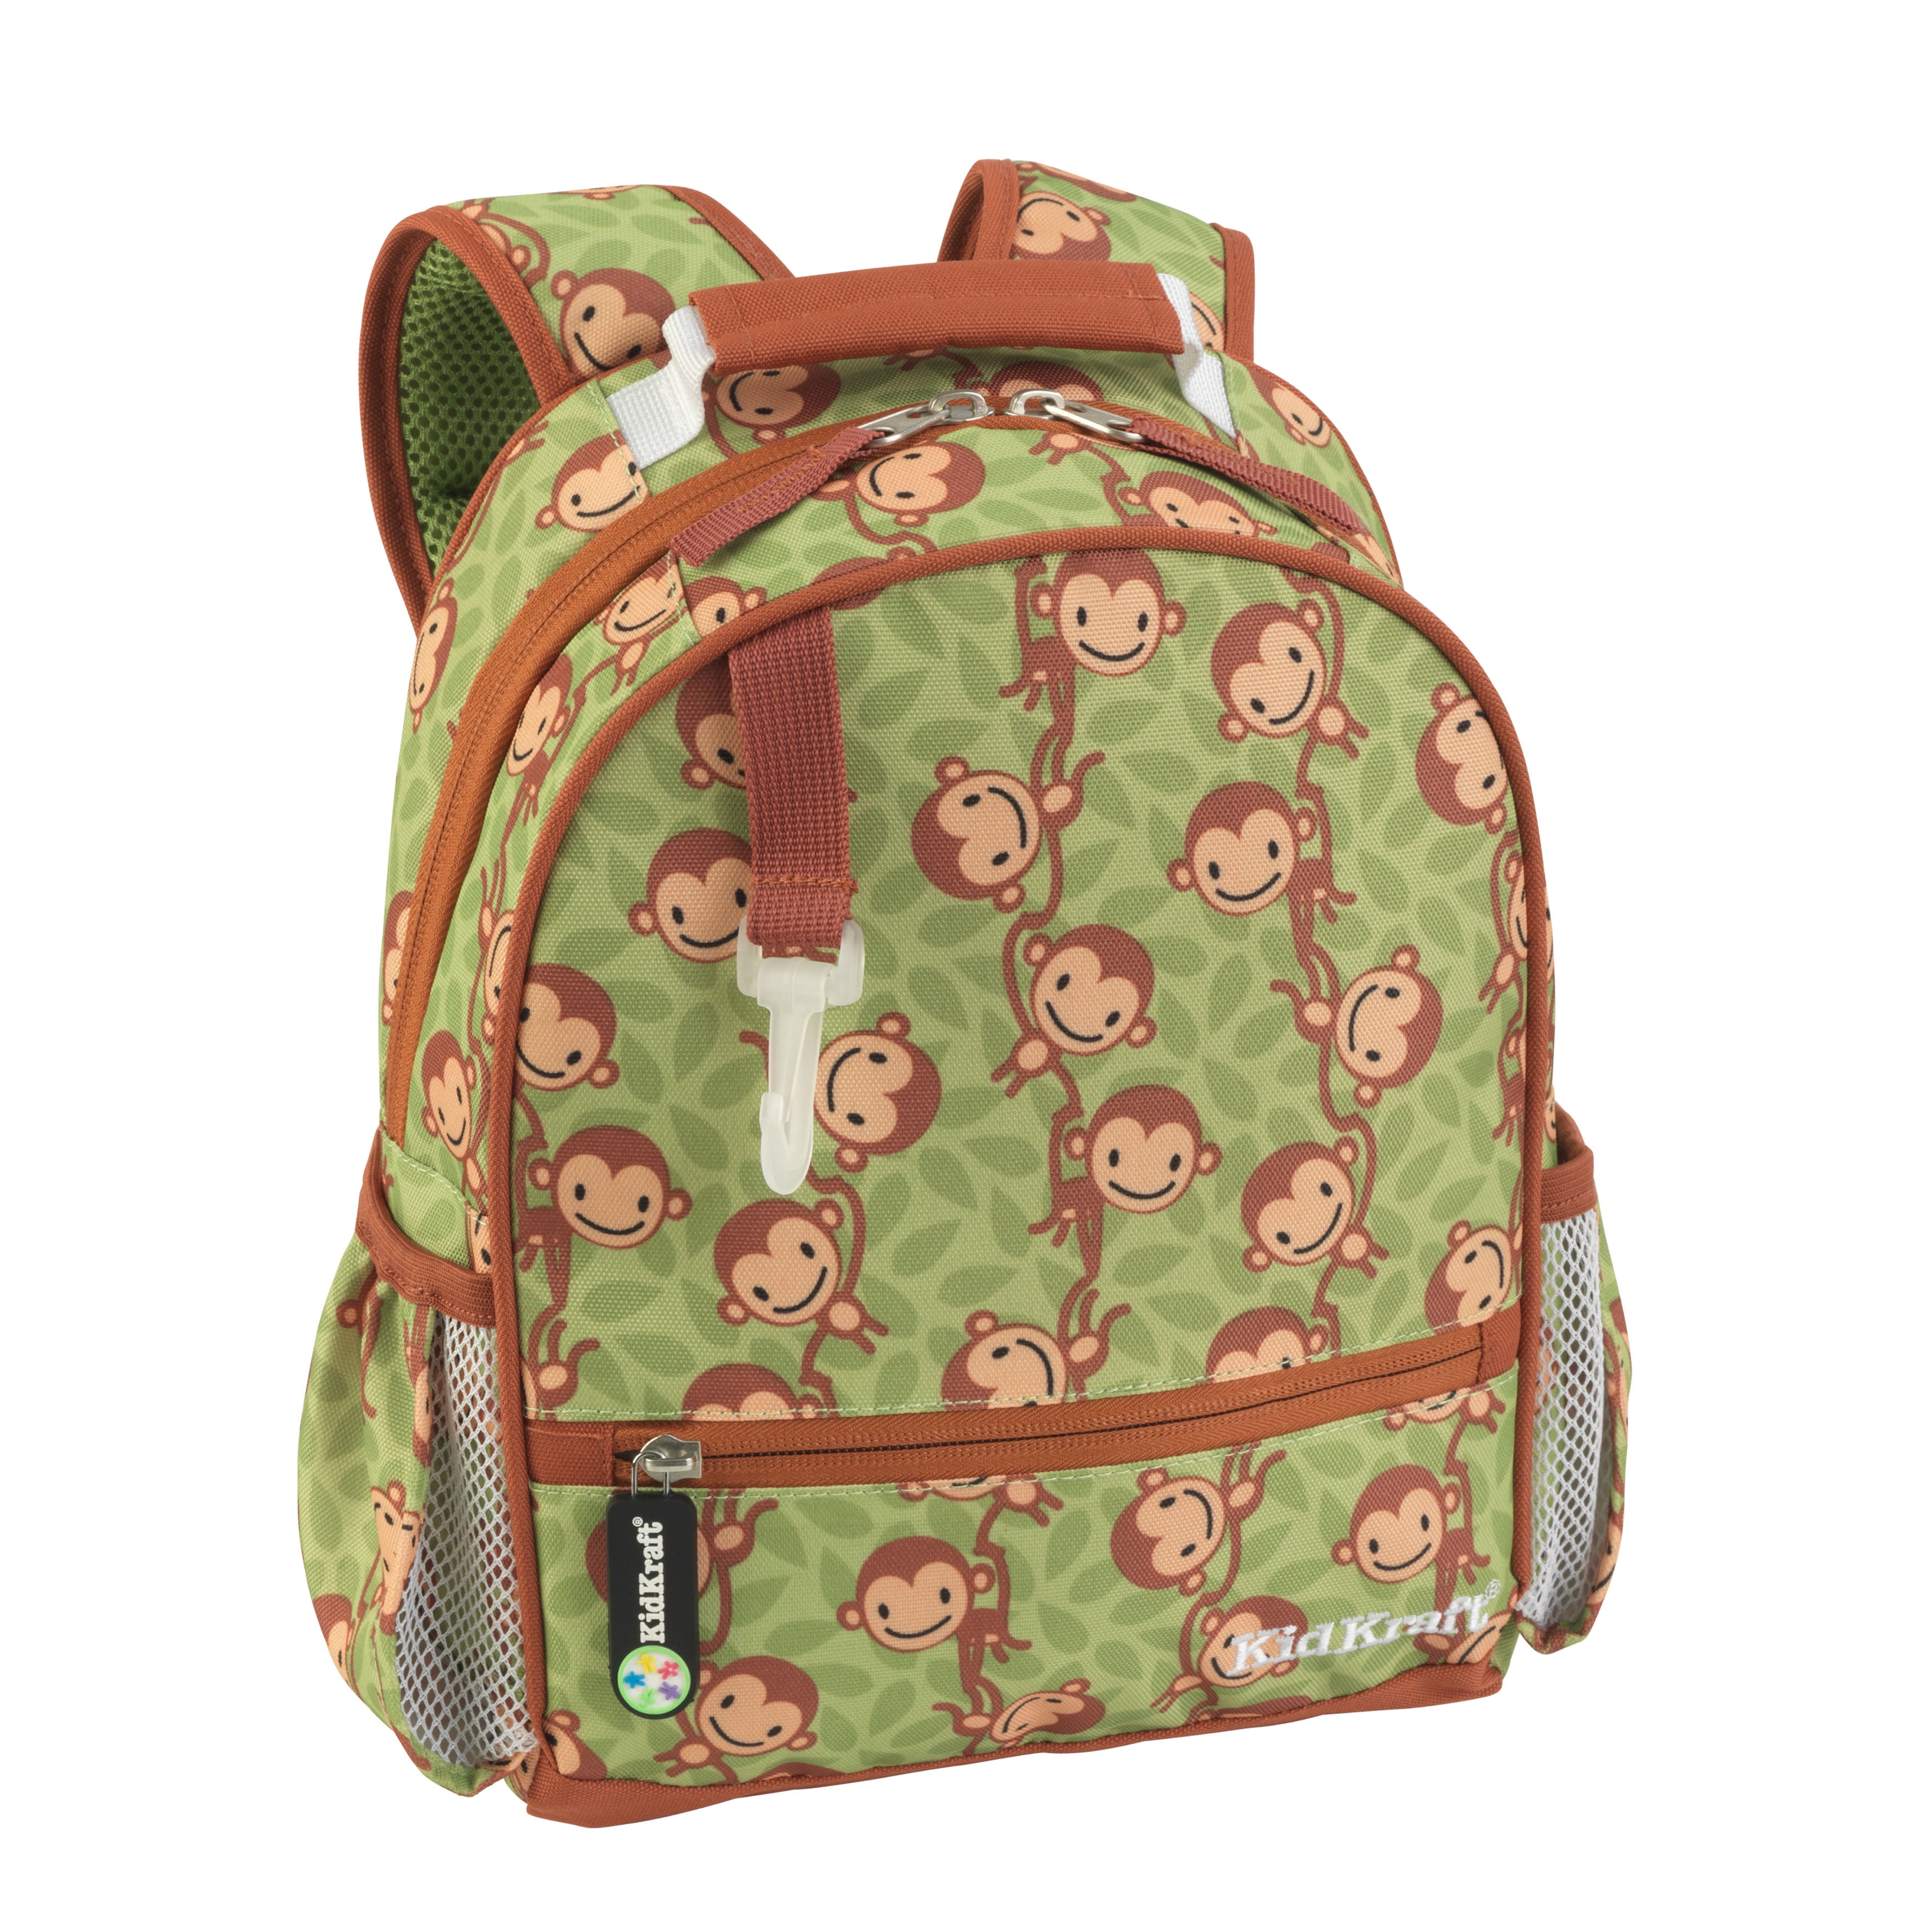 KidKraft Small Backpack - Monkey - Walmart.com